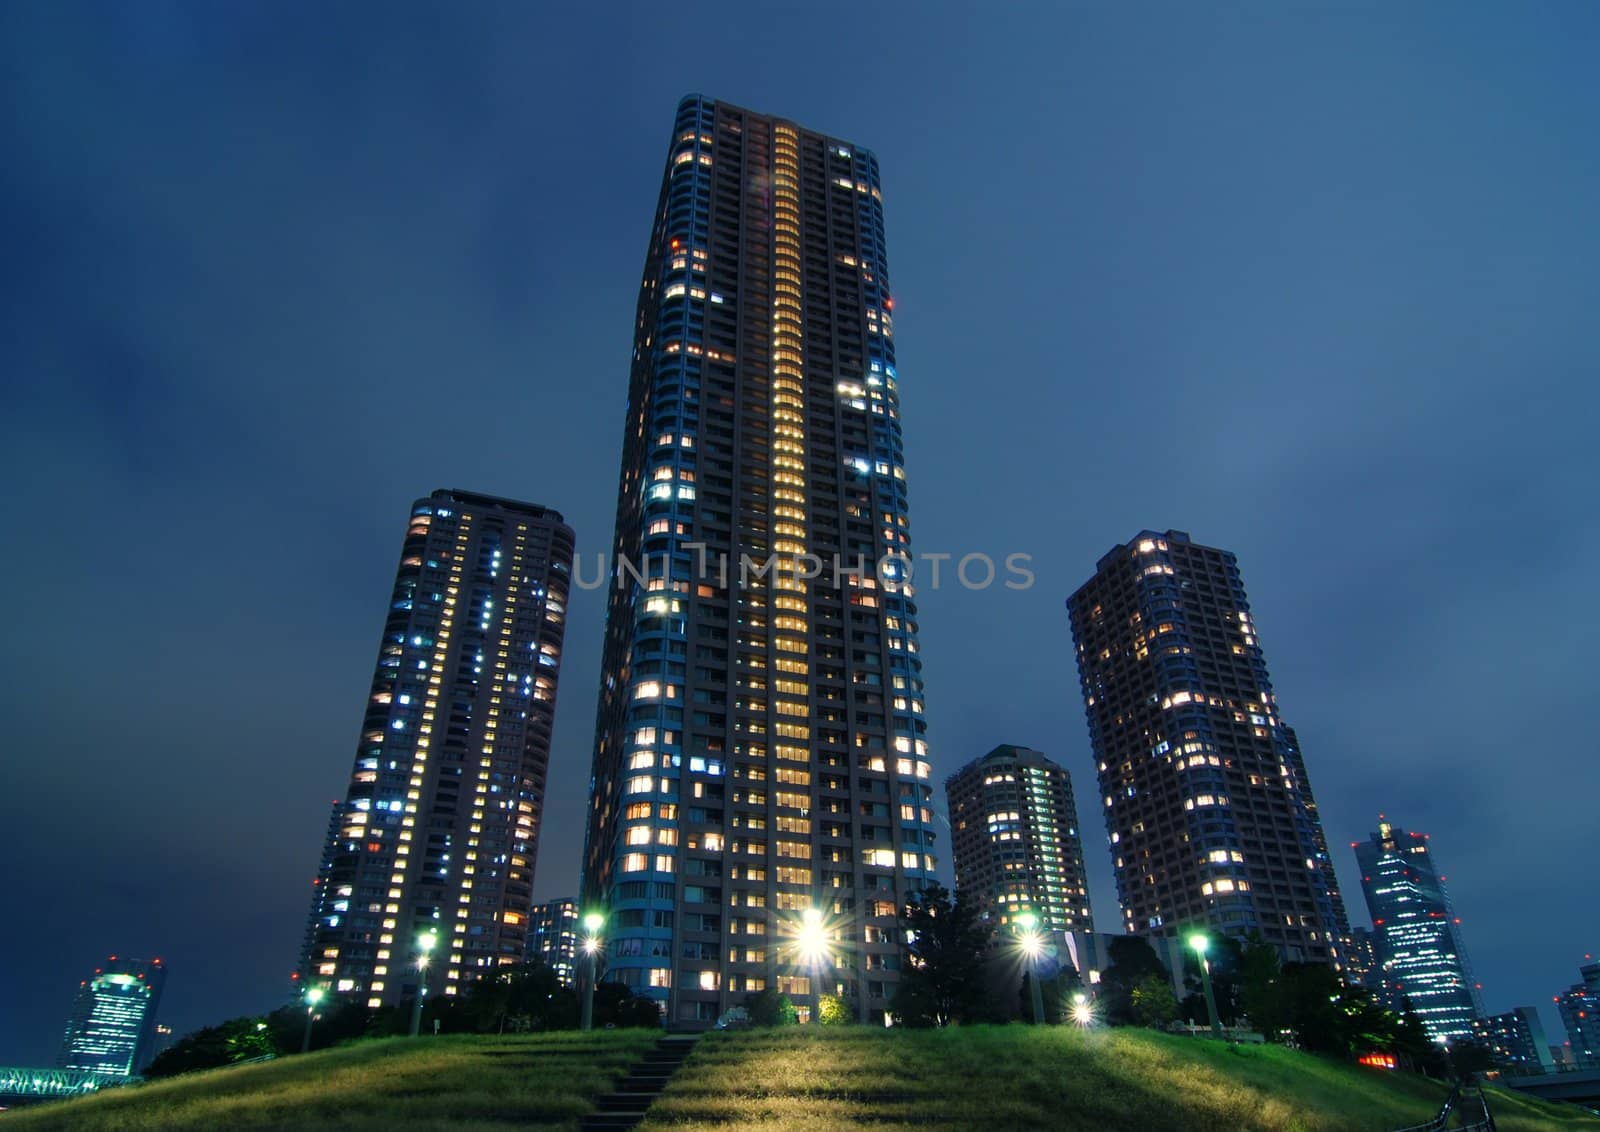 night skyscrapers by yuriz